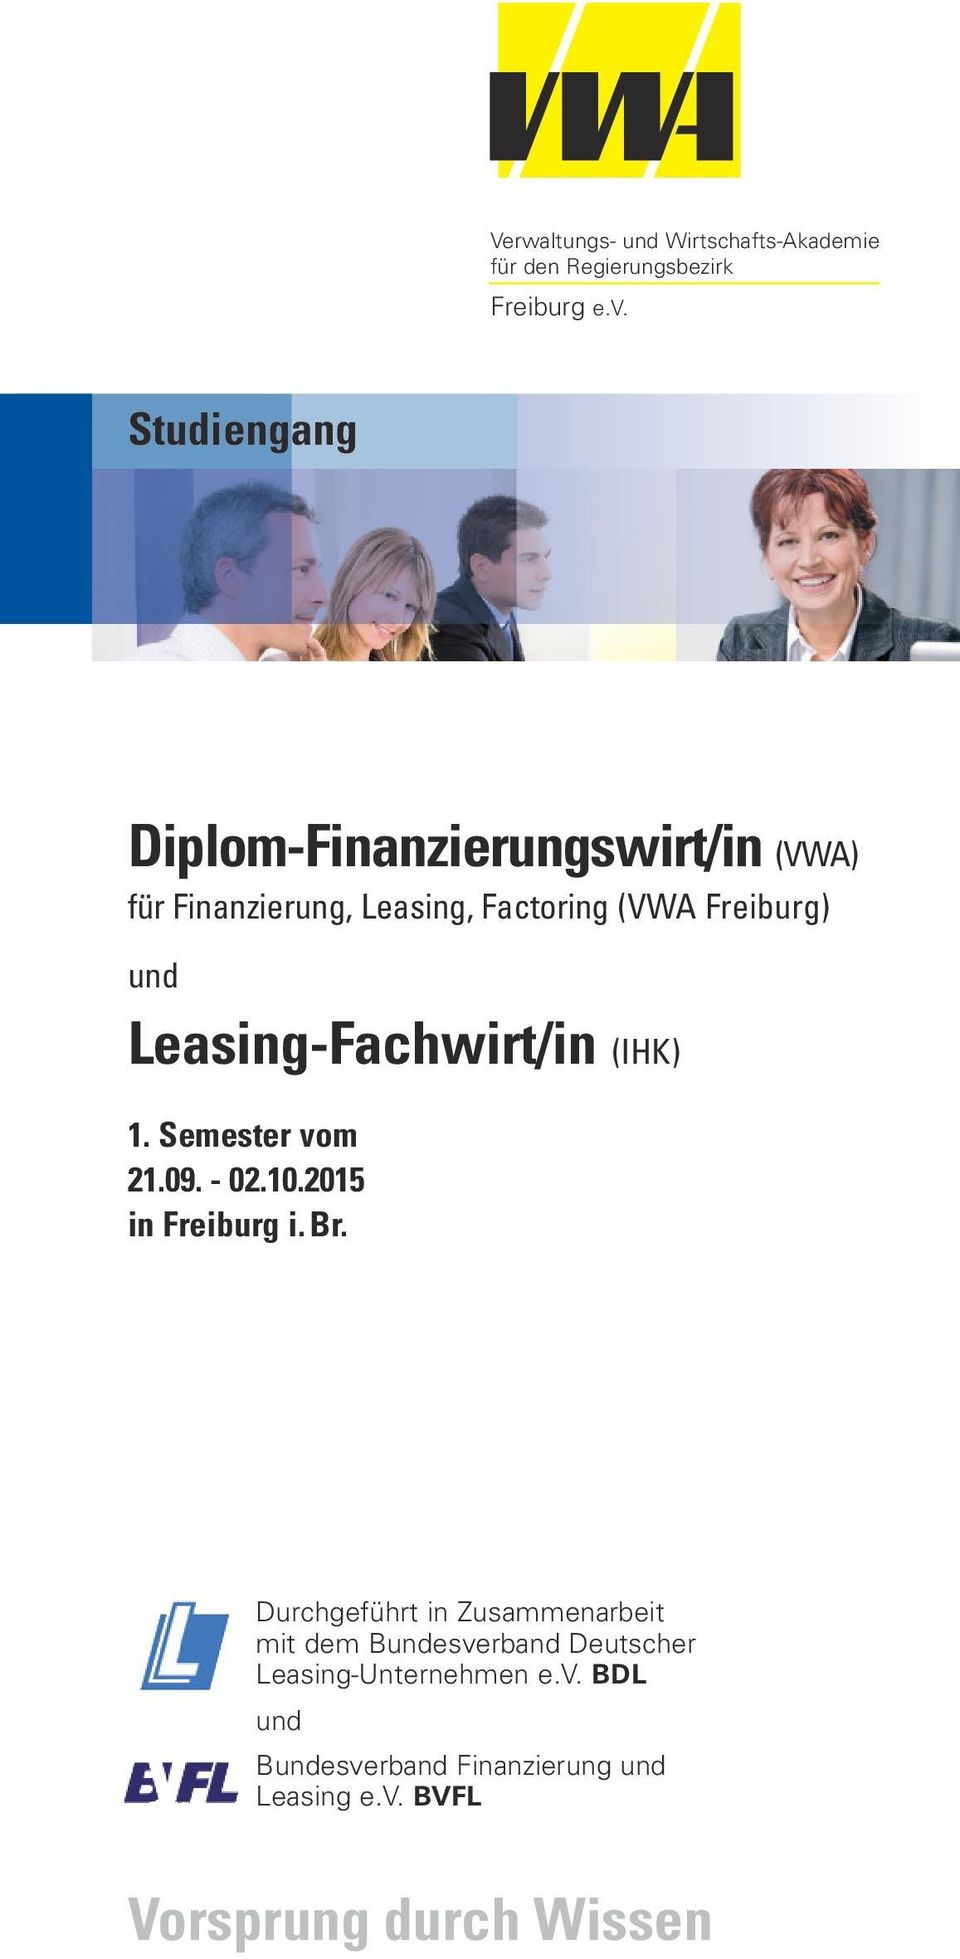 Leasing-Fachwirt/in (IHK) 1. Semester vom 21.09. - 02.10.2015 in Freiburg i. Br.